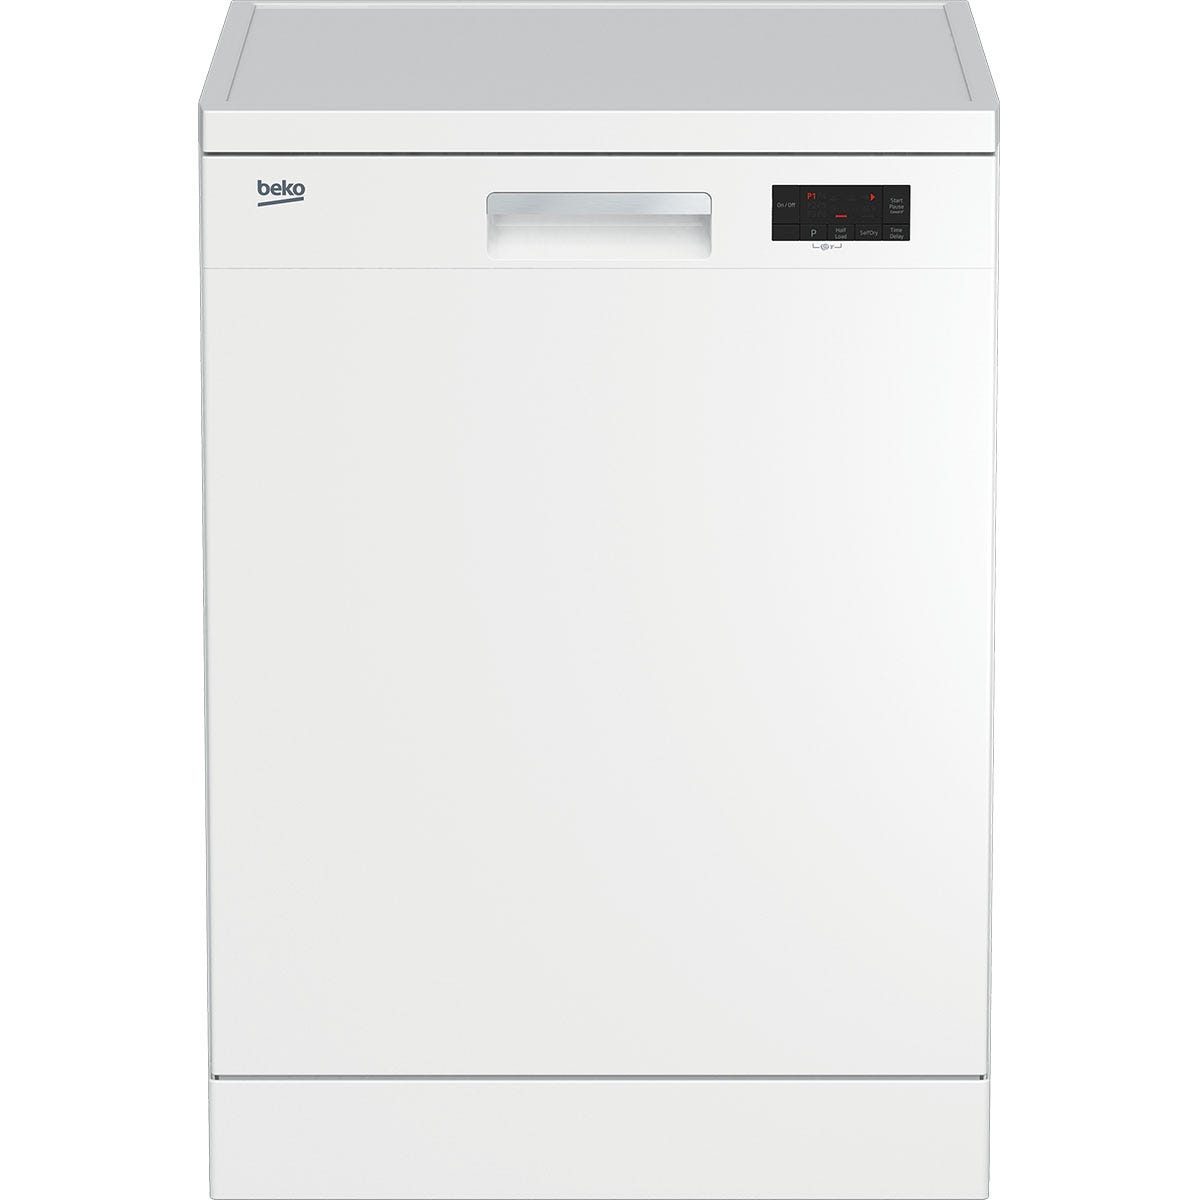 Beko DFN16430W 14 Place Freestanding Full Size 60cm Dishwasher - White